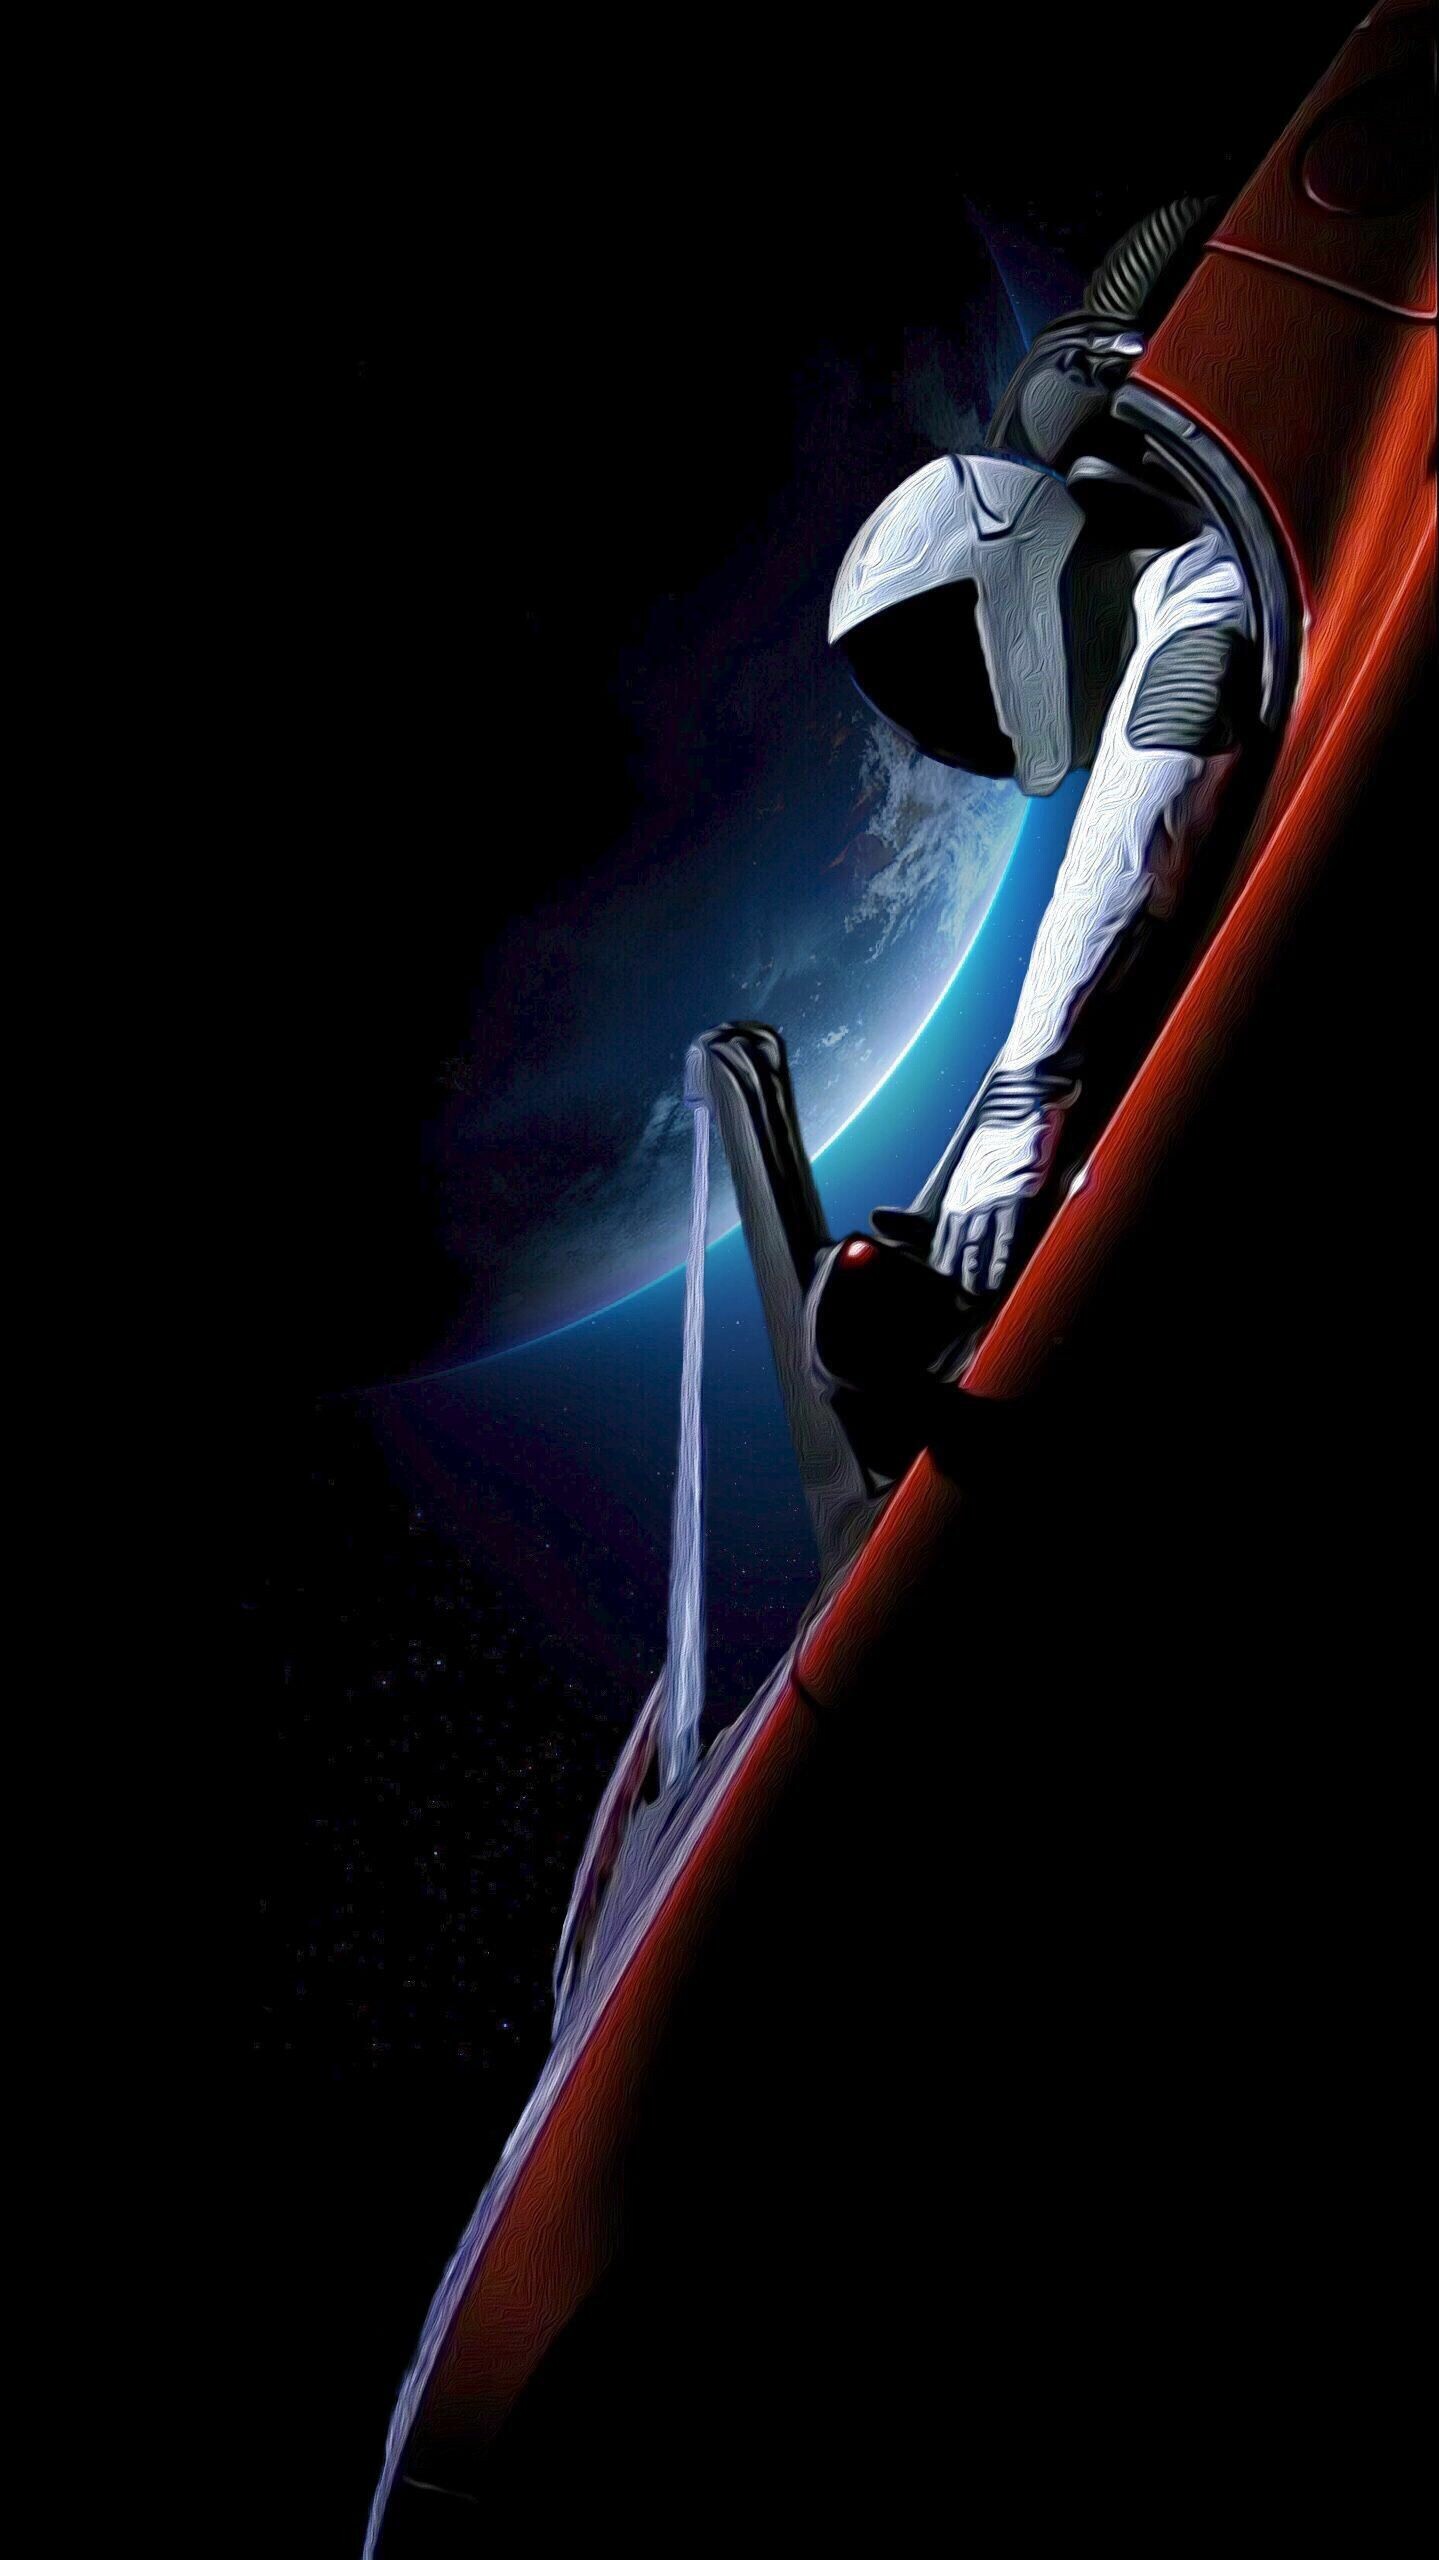 Elon Musk: The SpaceX Starman, Space art, Technology, Retro travel poster. 1440x2560 HD Wallpaper.